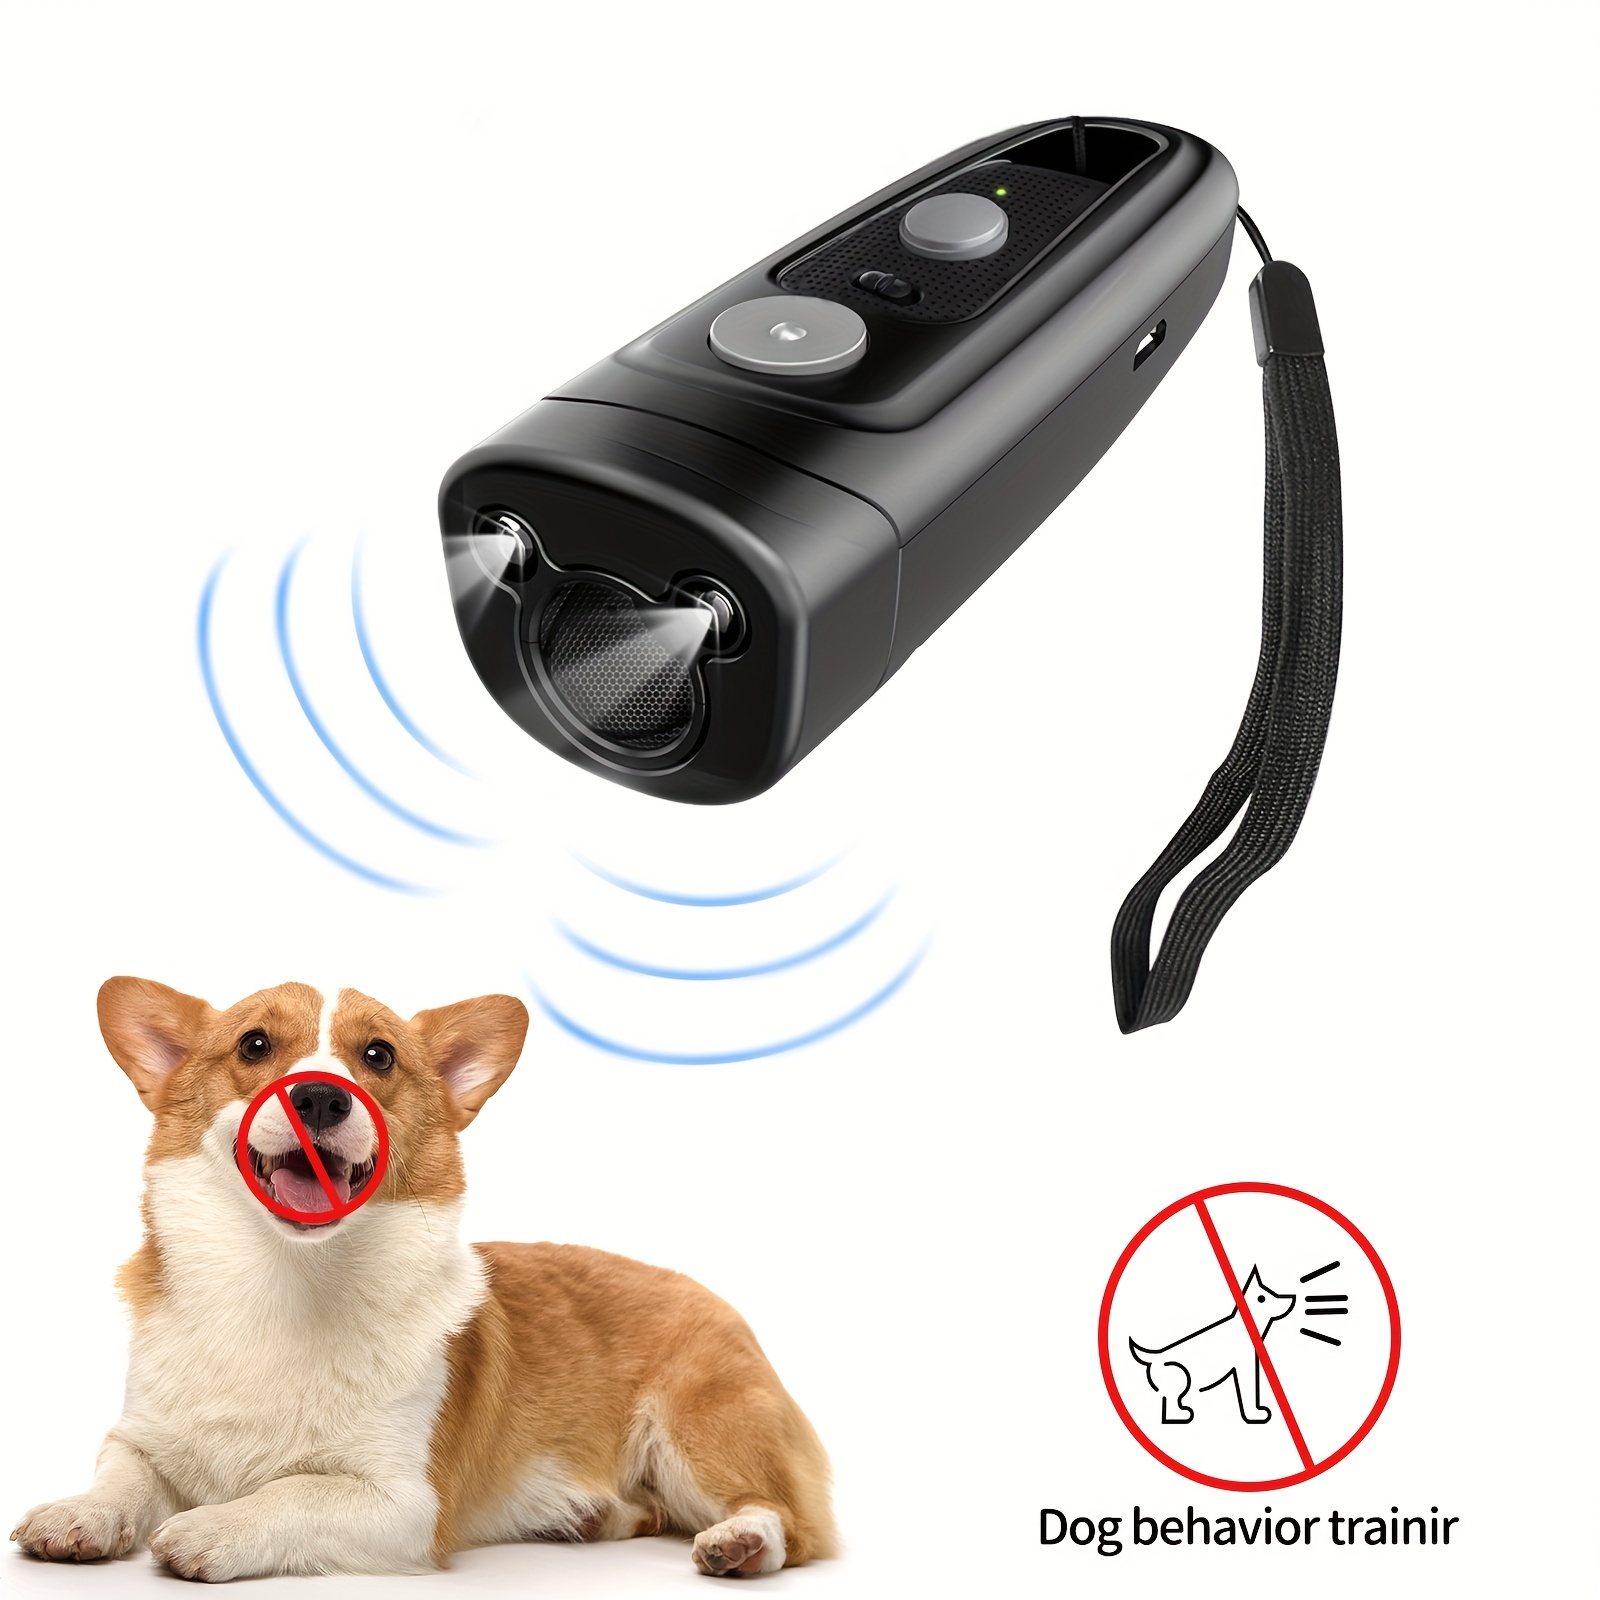 Buy Dog Repellent Anti Barking Ultrasonic Equipment - Handheld Anti Dog Trainer With Flashlight